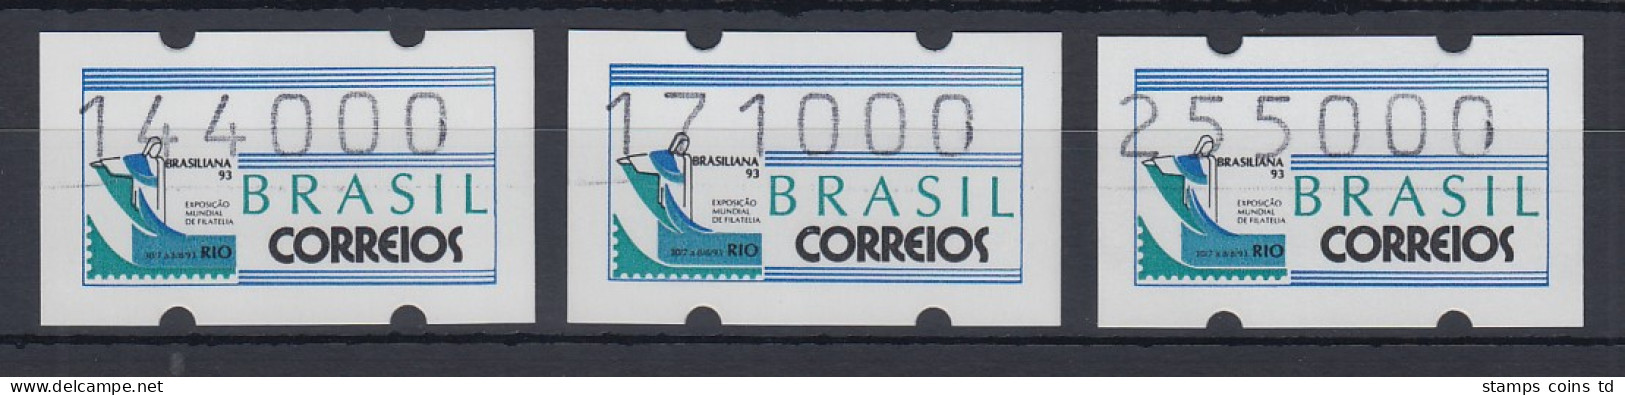 Brasilien Klüssendorf-ATM 1993 BRASILIANA Mi-Nr 5 Satz 144000-171000-255000 ** - Frankeervignetten (Frama)